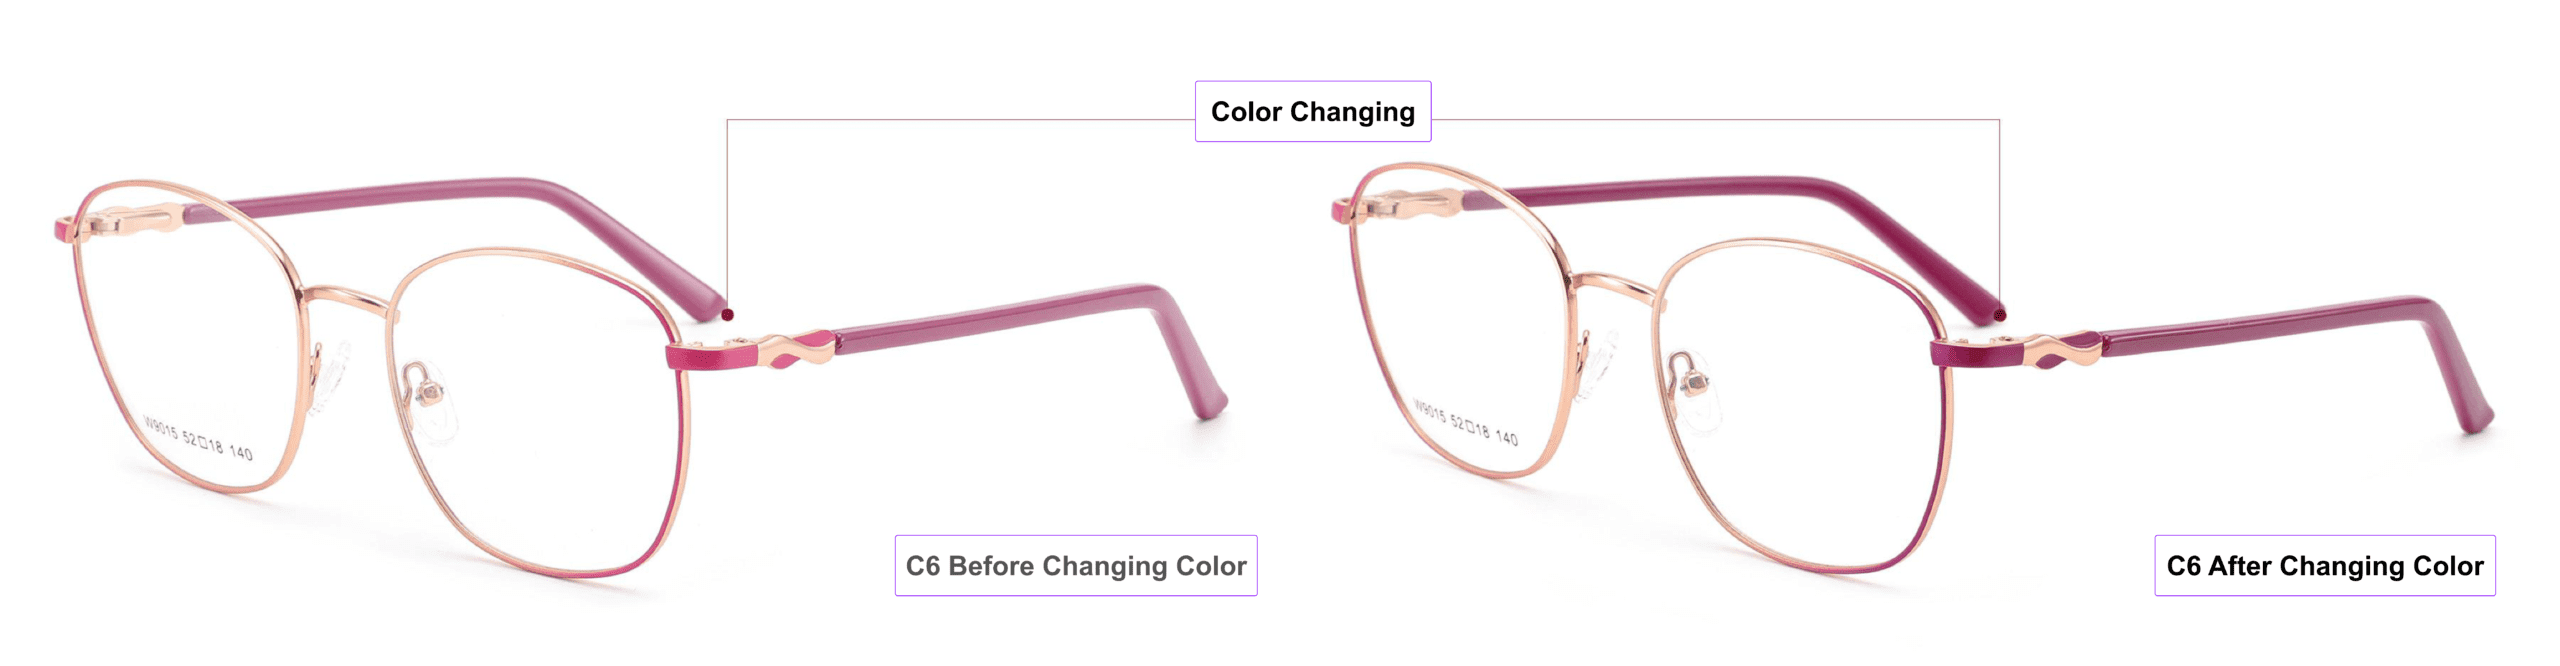 Sunlight Activated, Color Changing Glasses Frames,orchid, pink gold, burgundy, China glasses frames